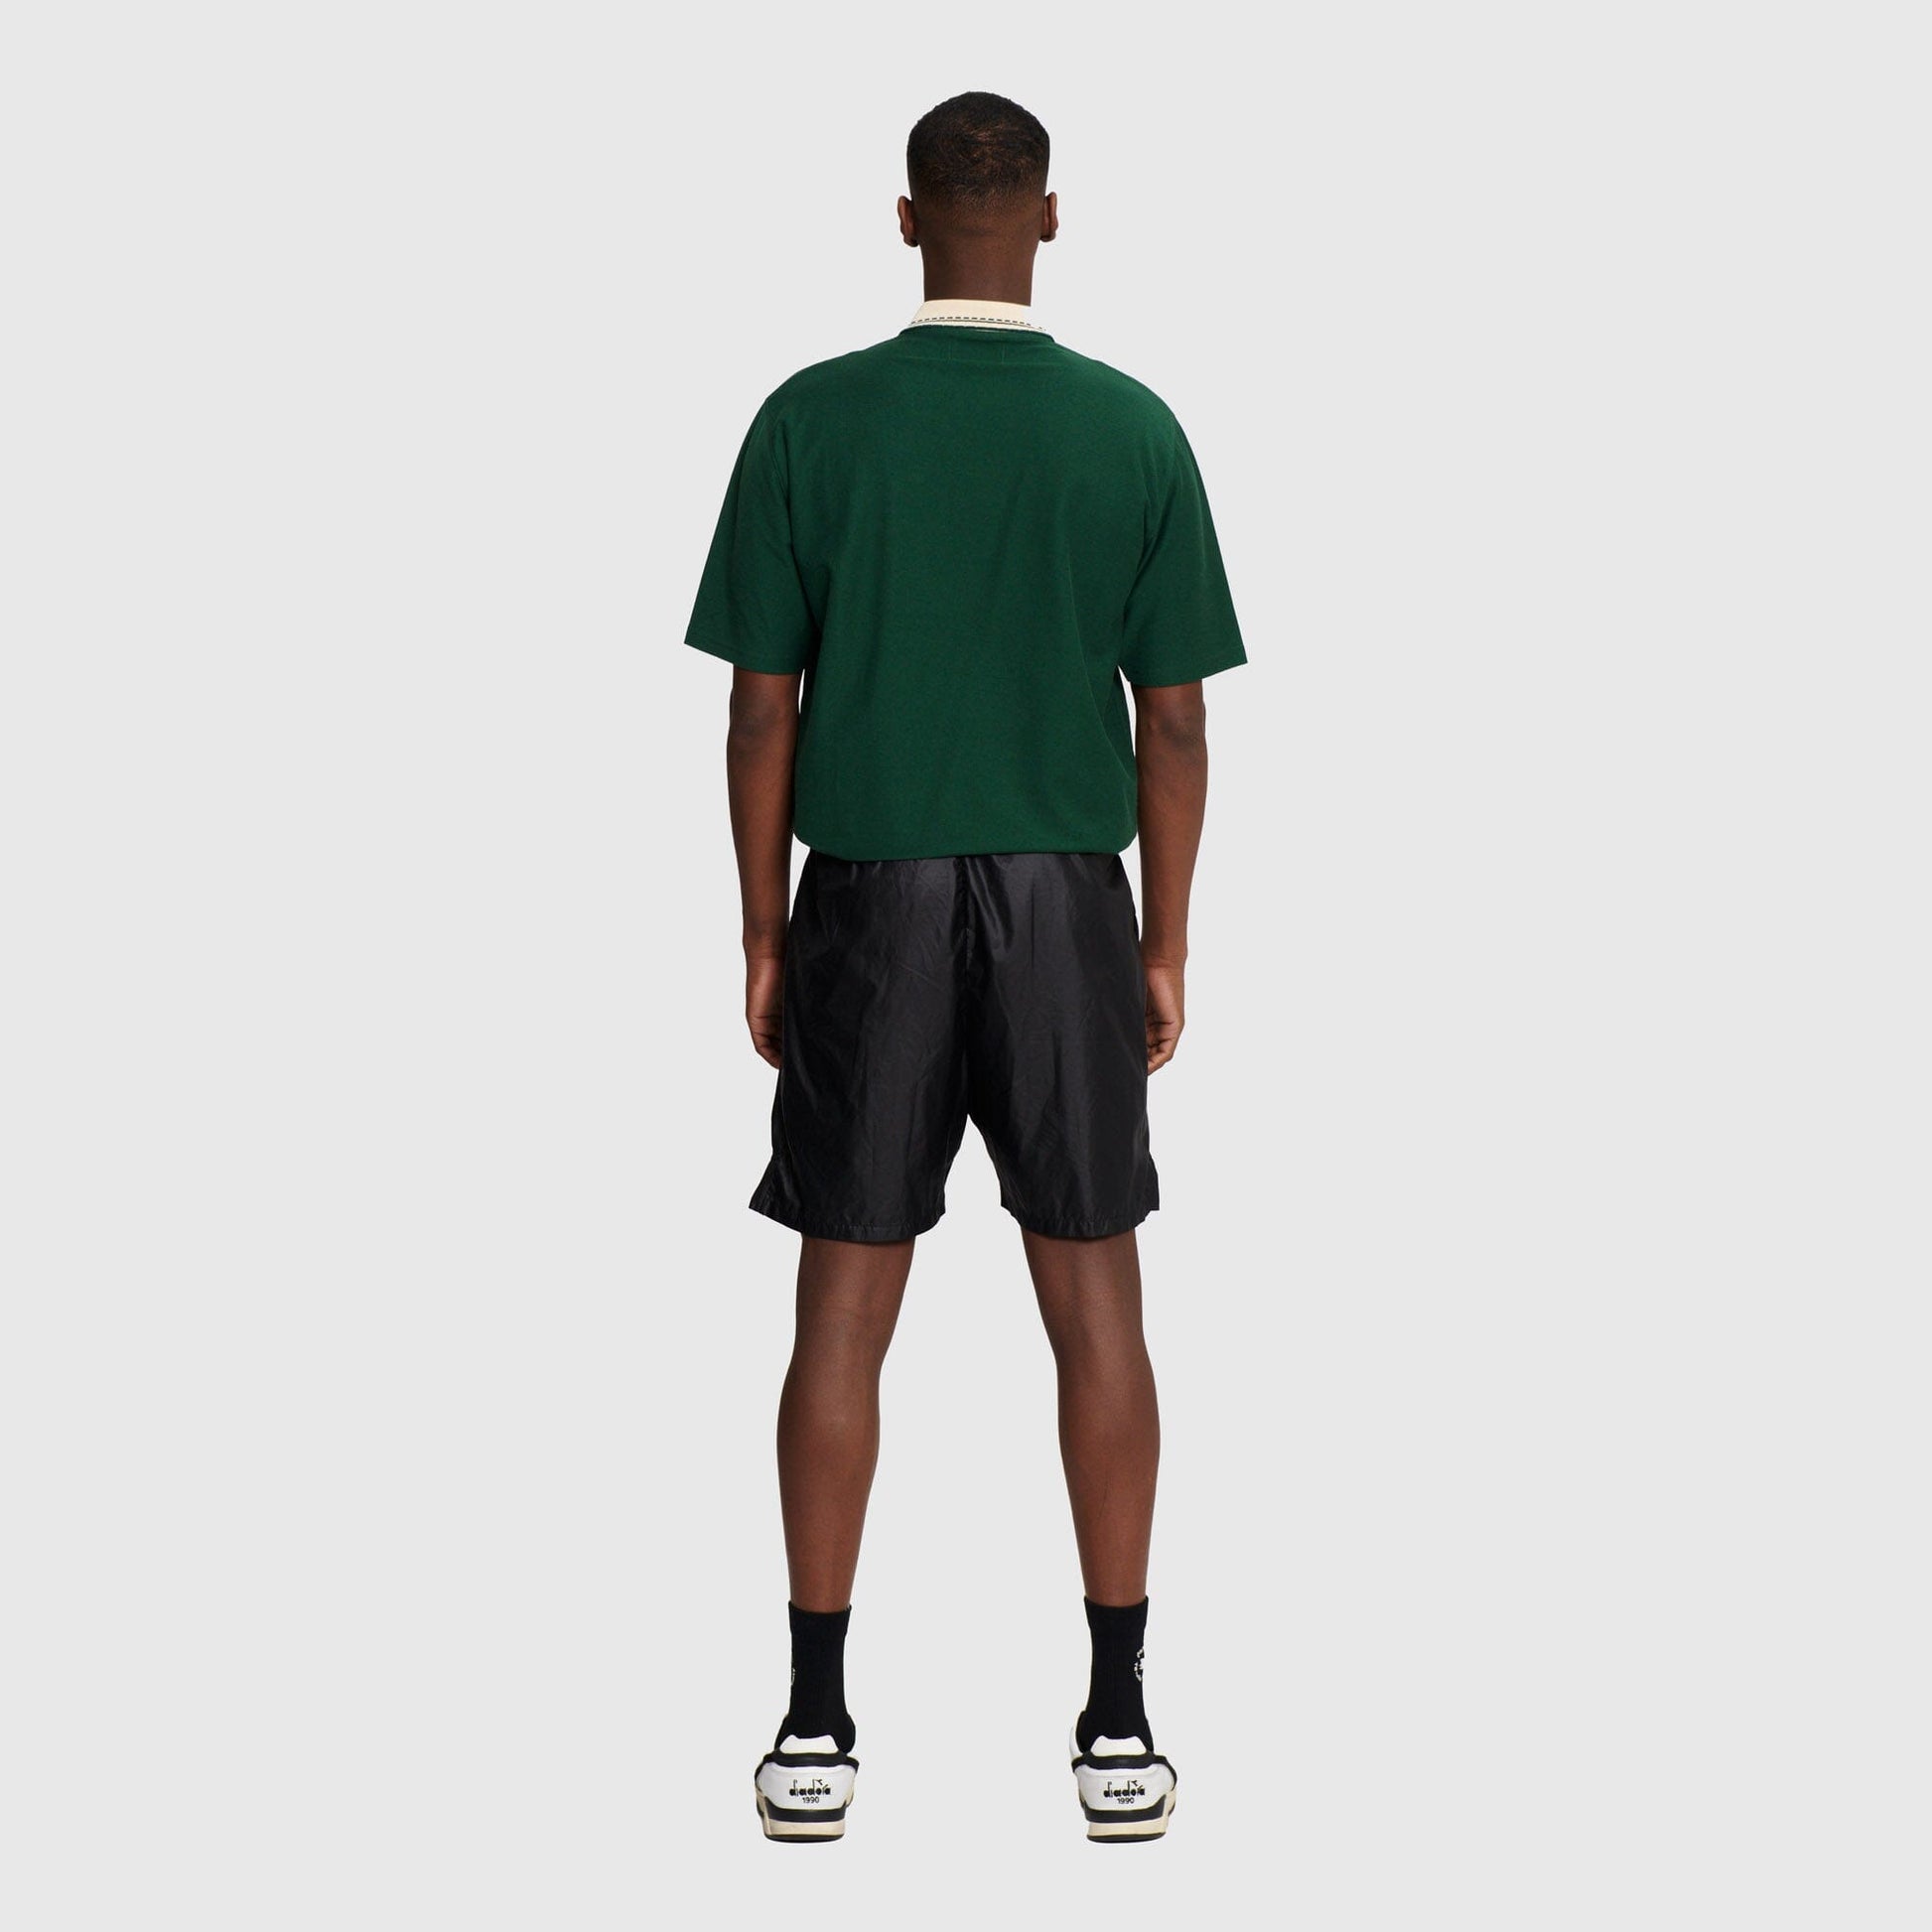 Palmes Olde Shorts - Black Shorts Palmes 